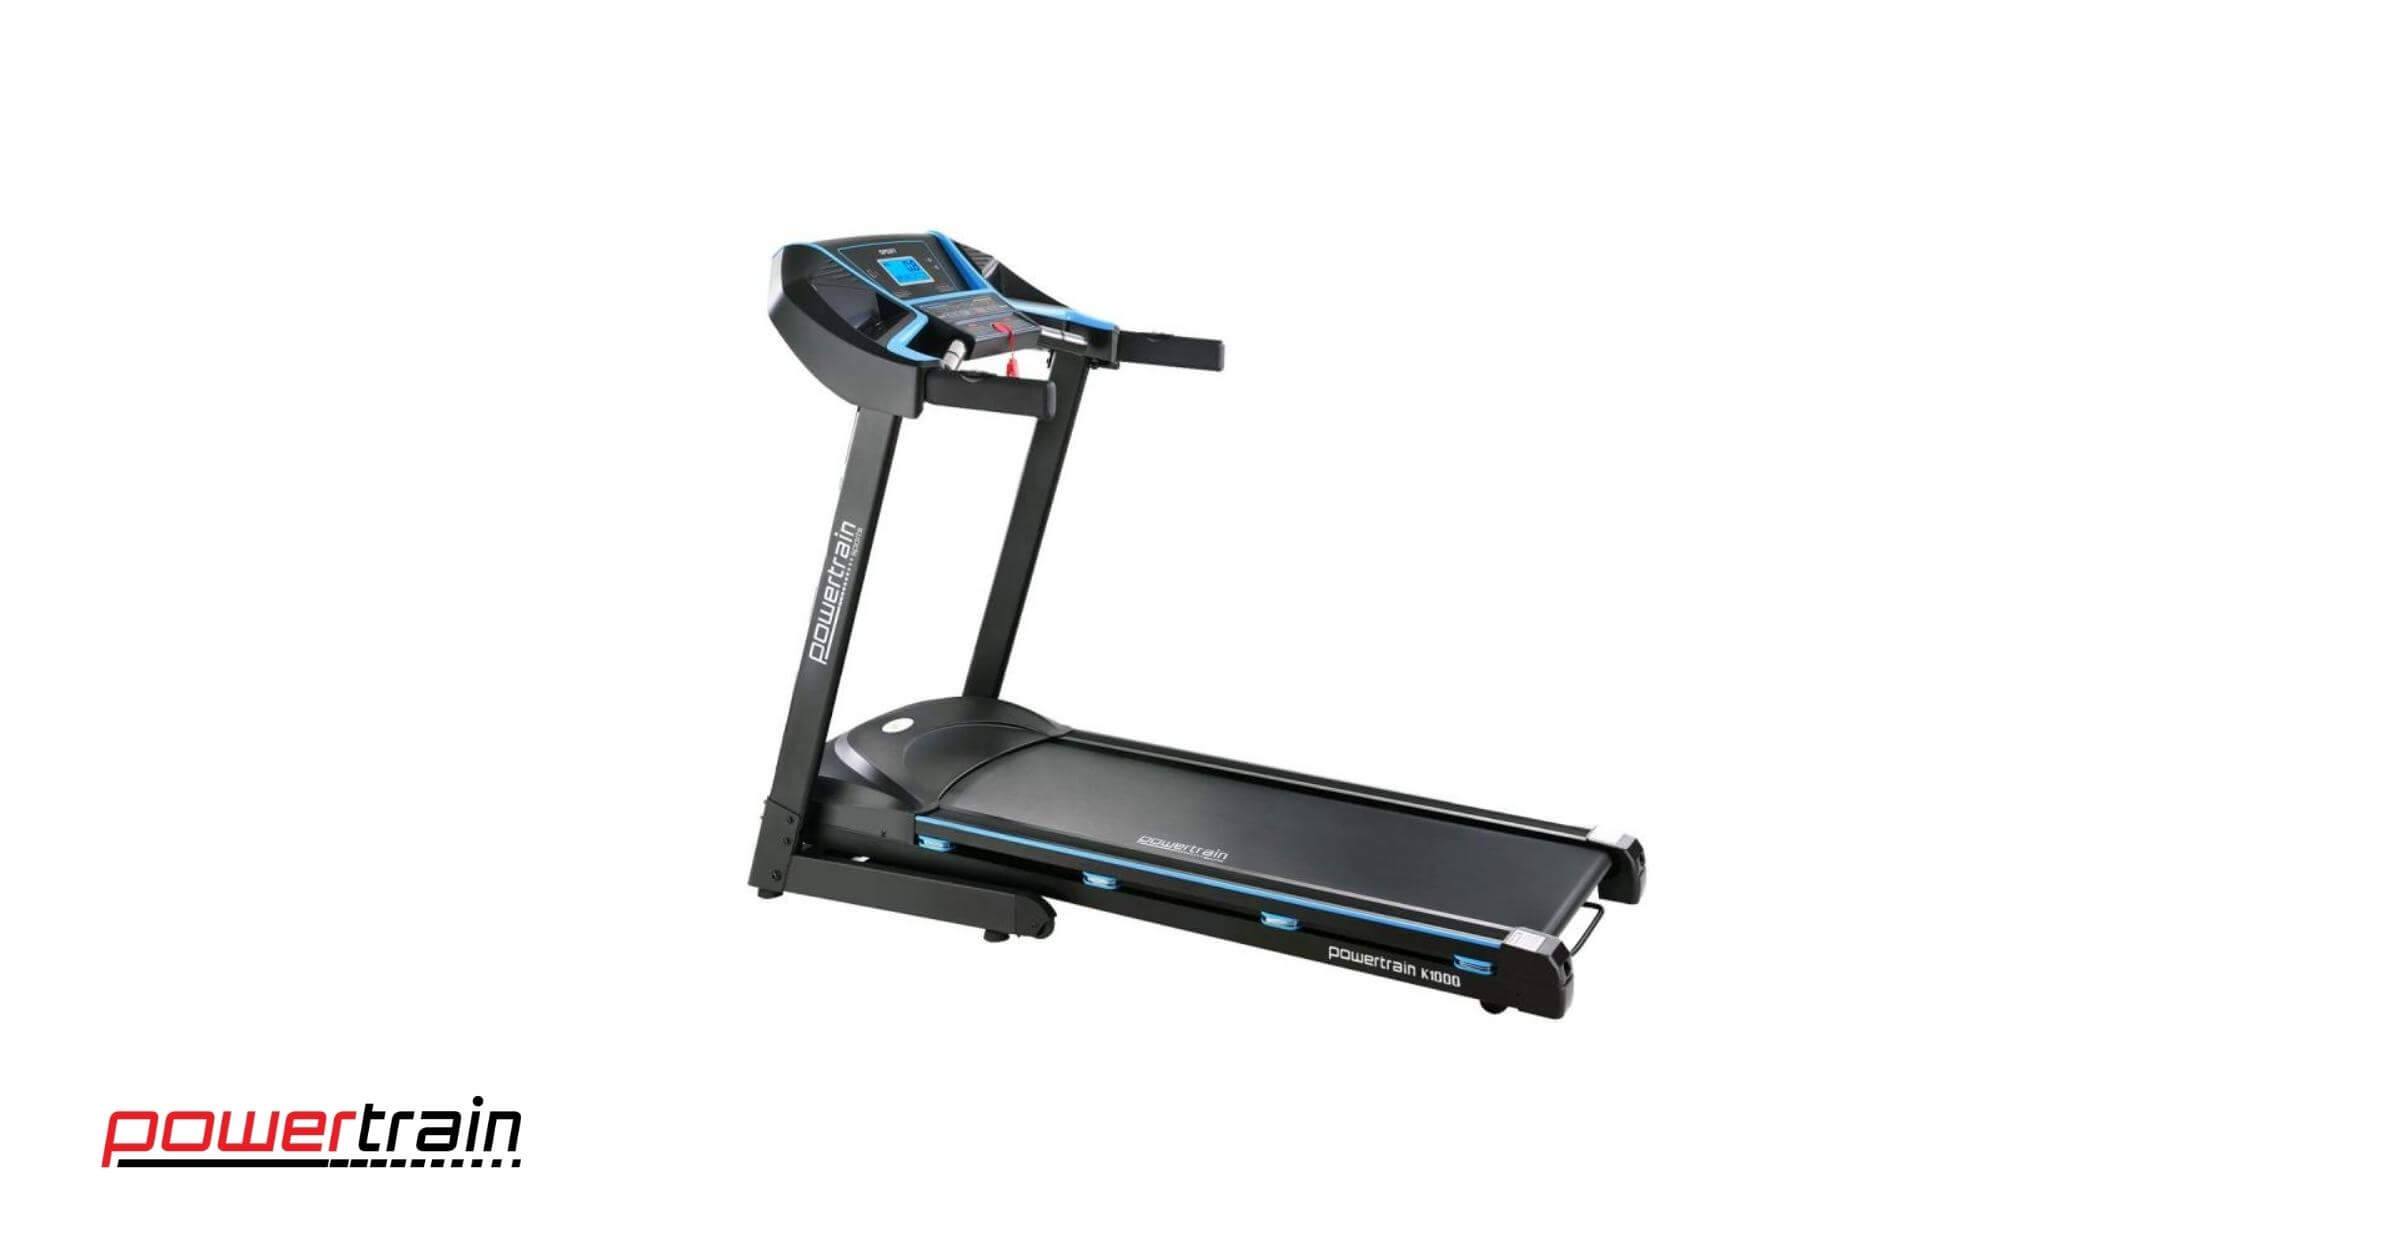 Powertrain K1000 Treadmill